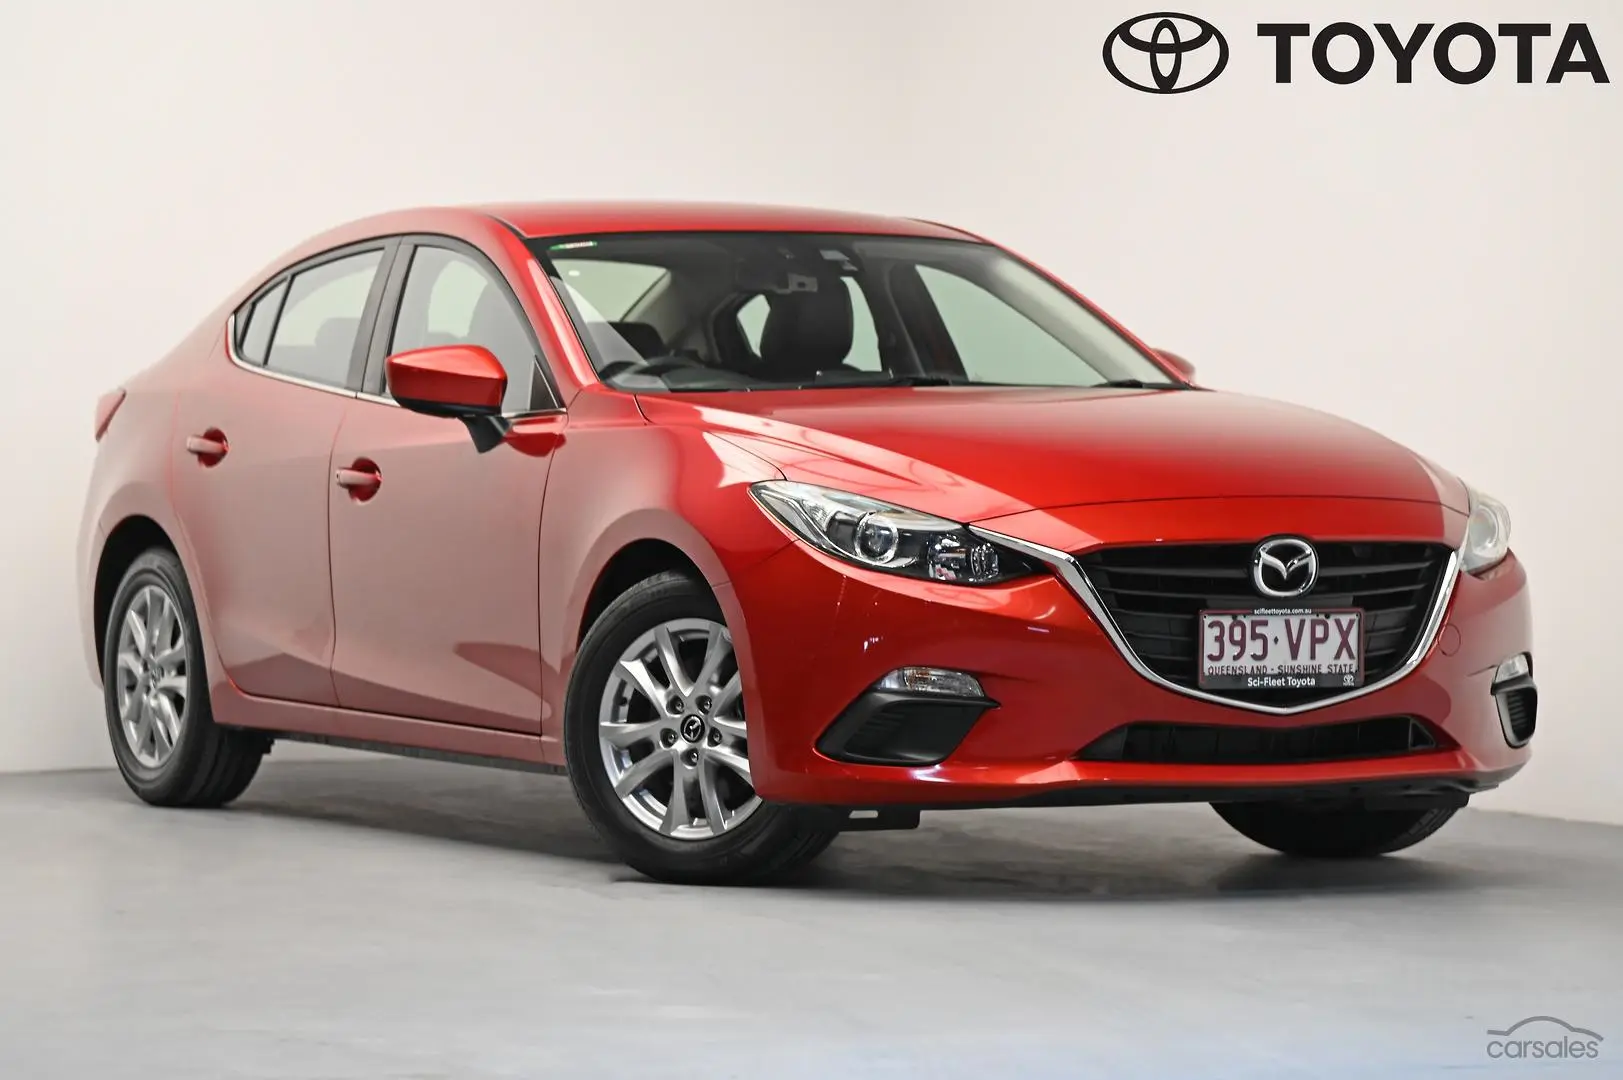 2014 Mazda 3 Image 1